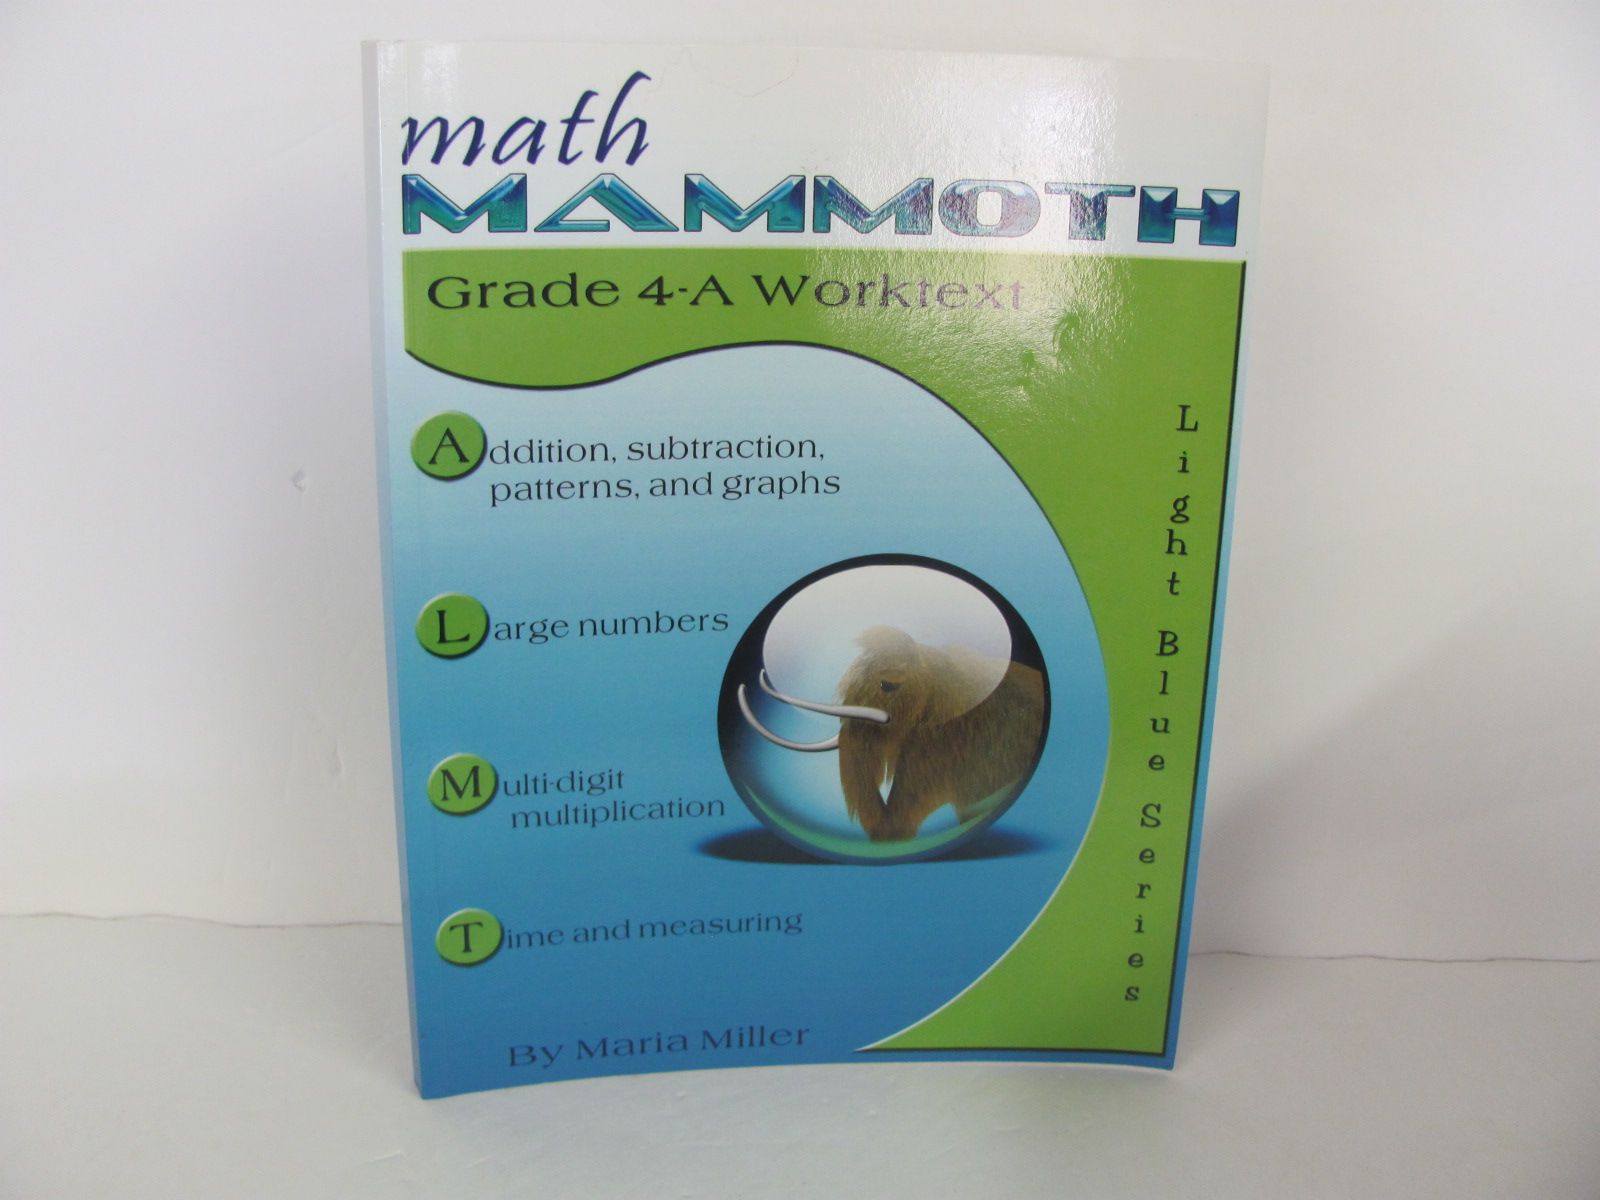 Math-Mammoth-Workbook-Used-4th-Grade-Mathematics-Mathematics_334165A.jpg